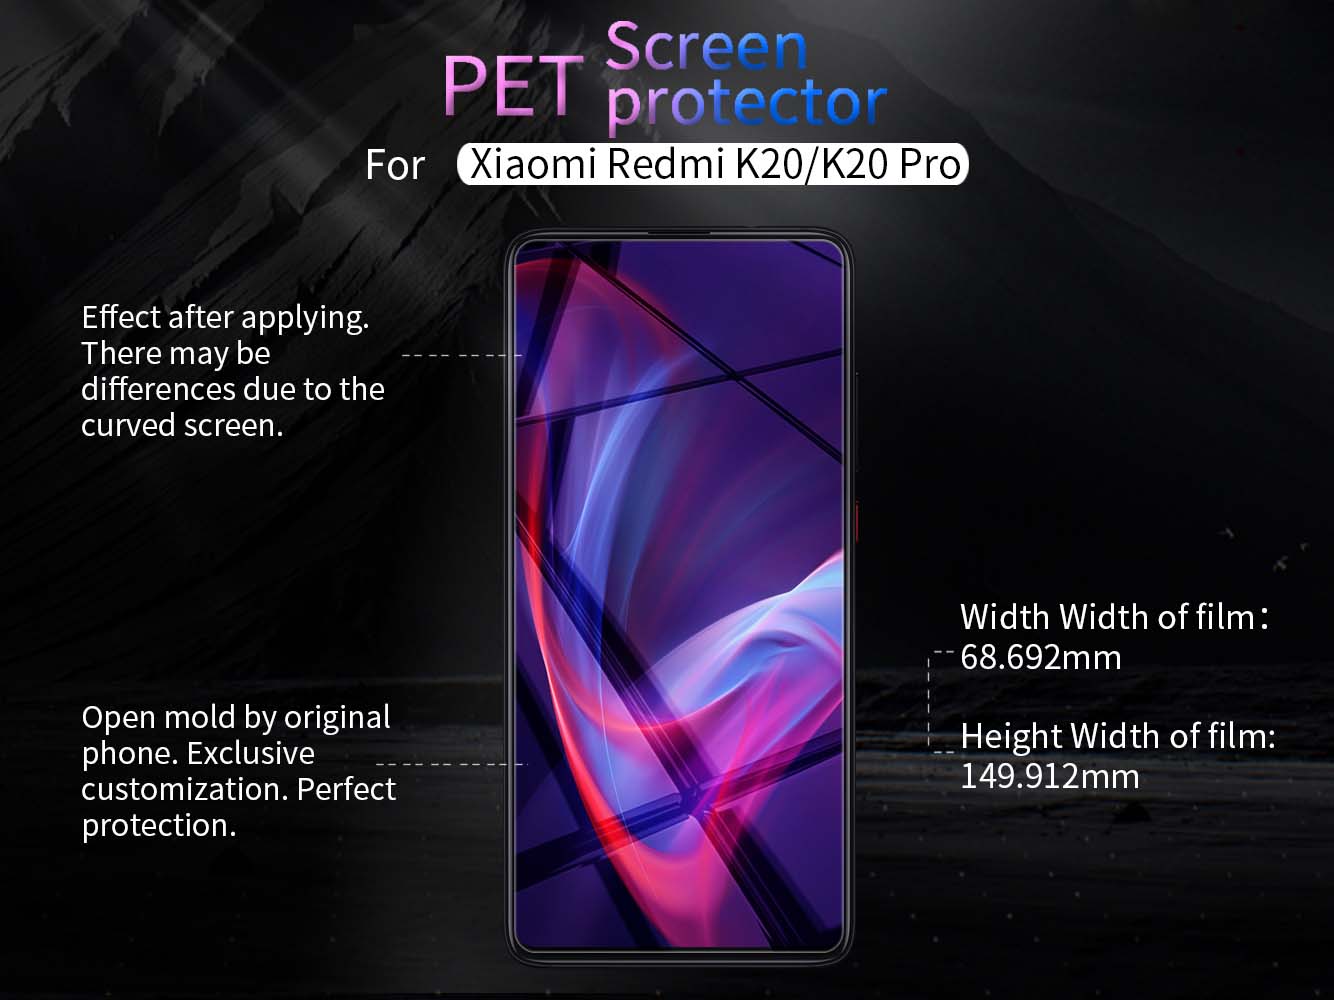 Xiaomi Redmi K20/K20 Pro screen protector